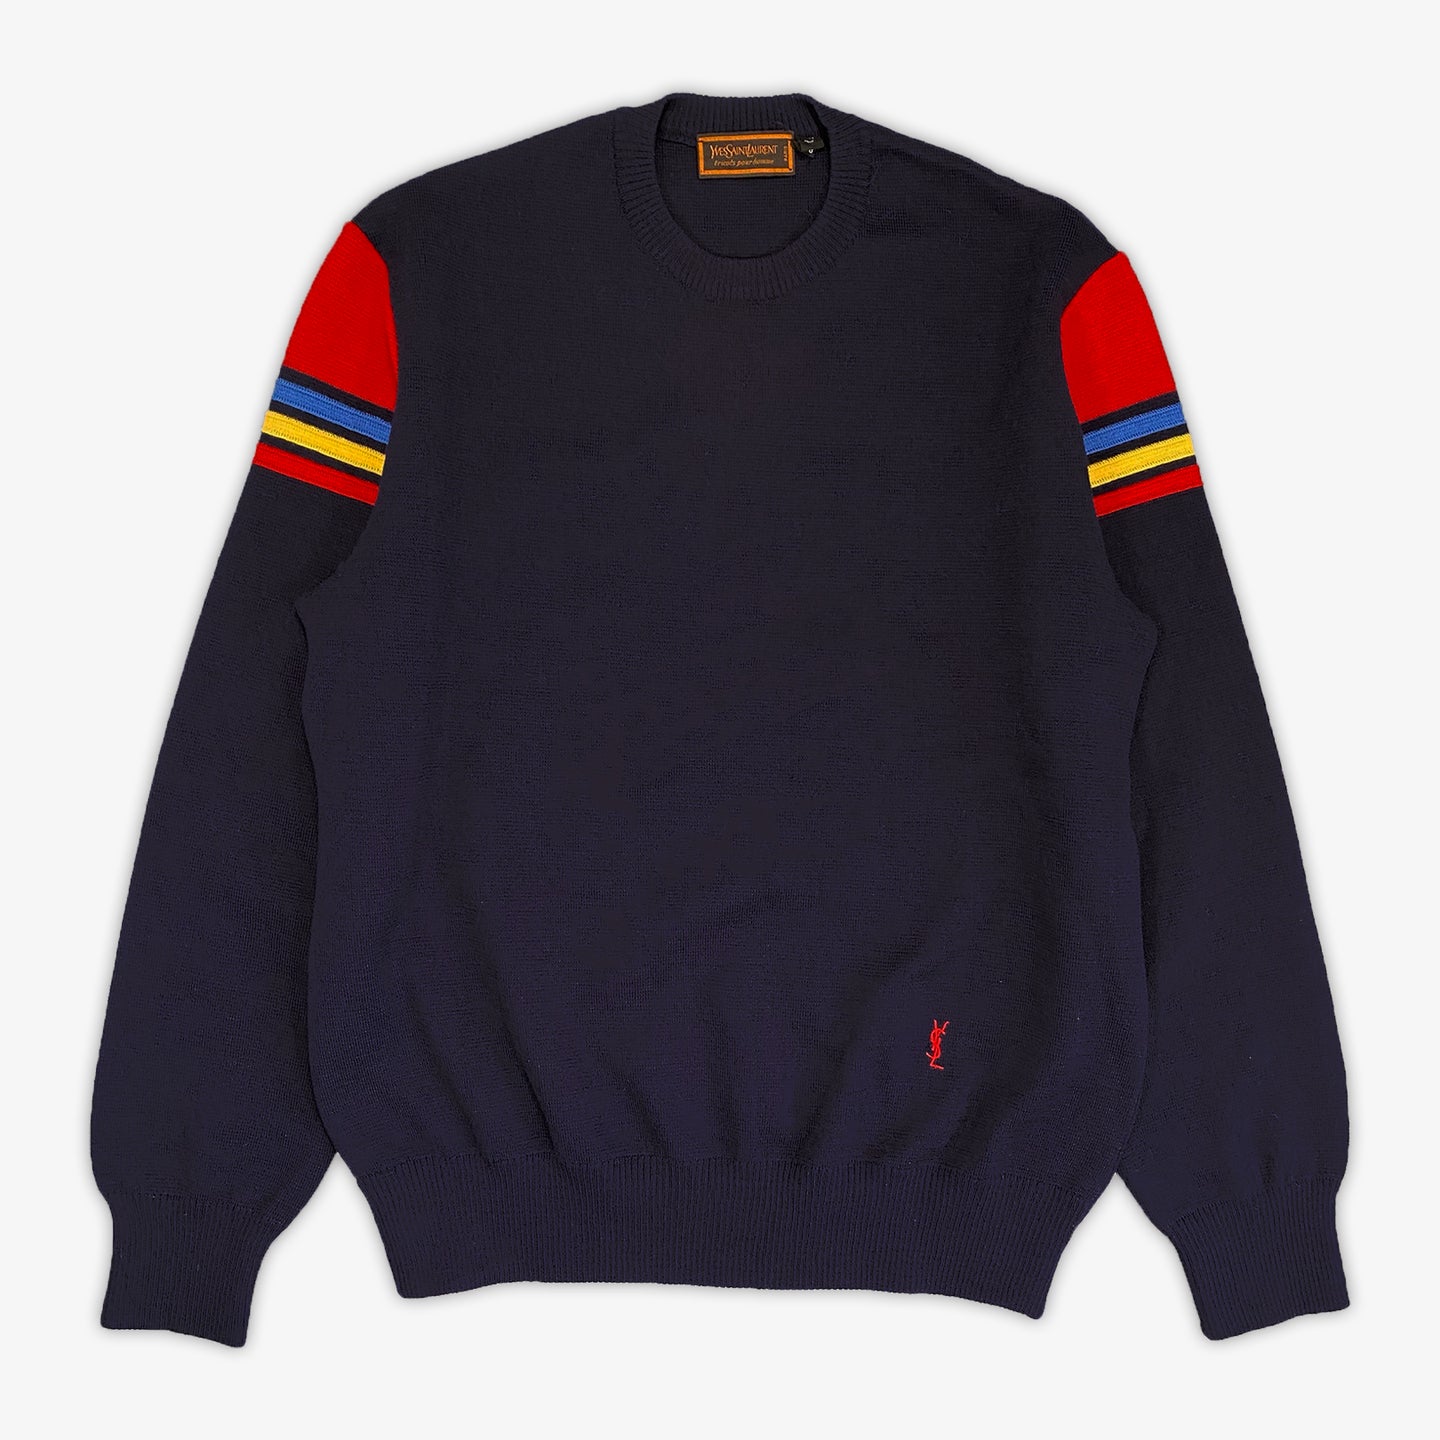 Yves Saint Laurent Knit Sweater (Navy)